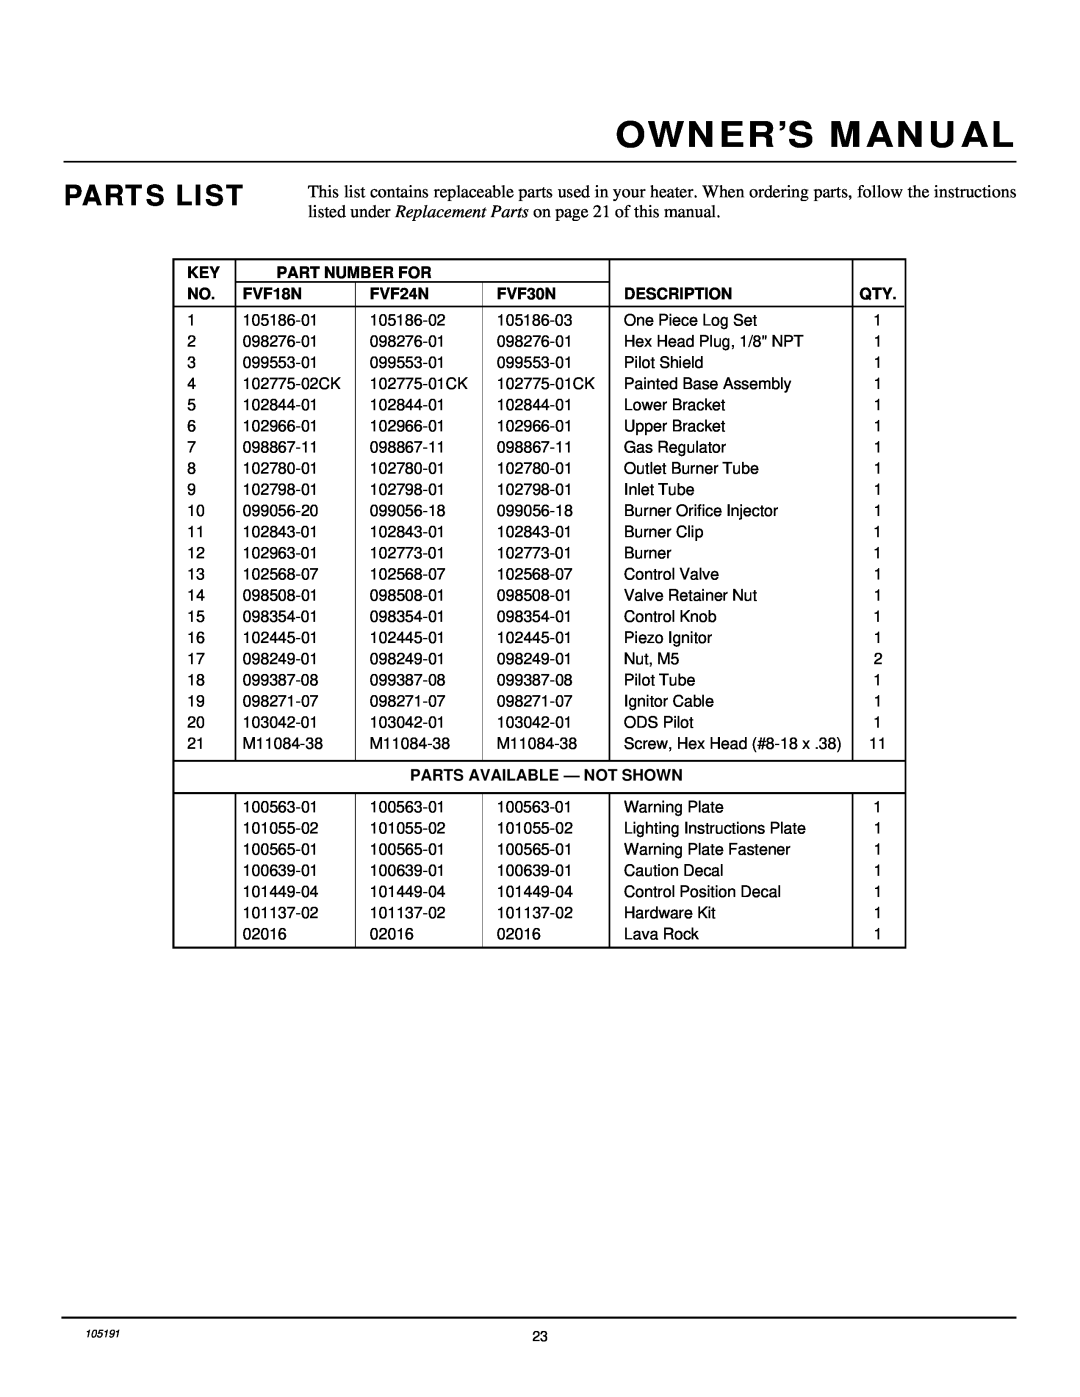 Desa FVF30N Parts List, Owner’S Manual, Part Number For, FVF18N, FVF24N, Description, Parts Available — Not Shown 